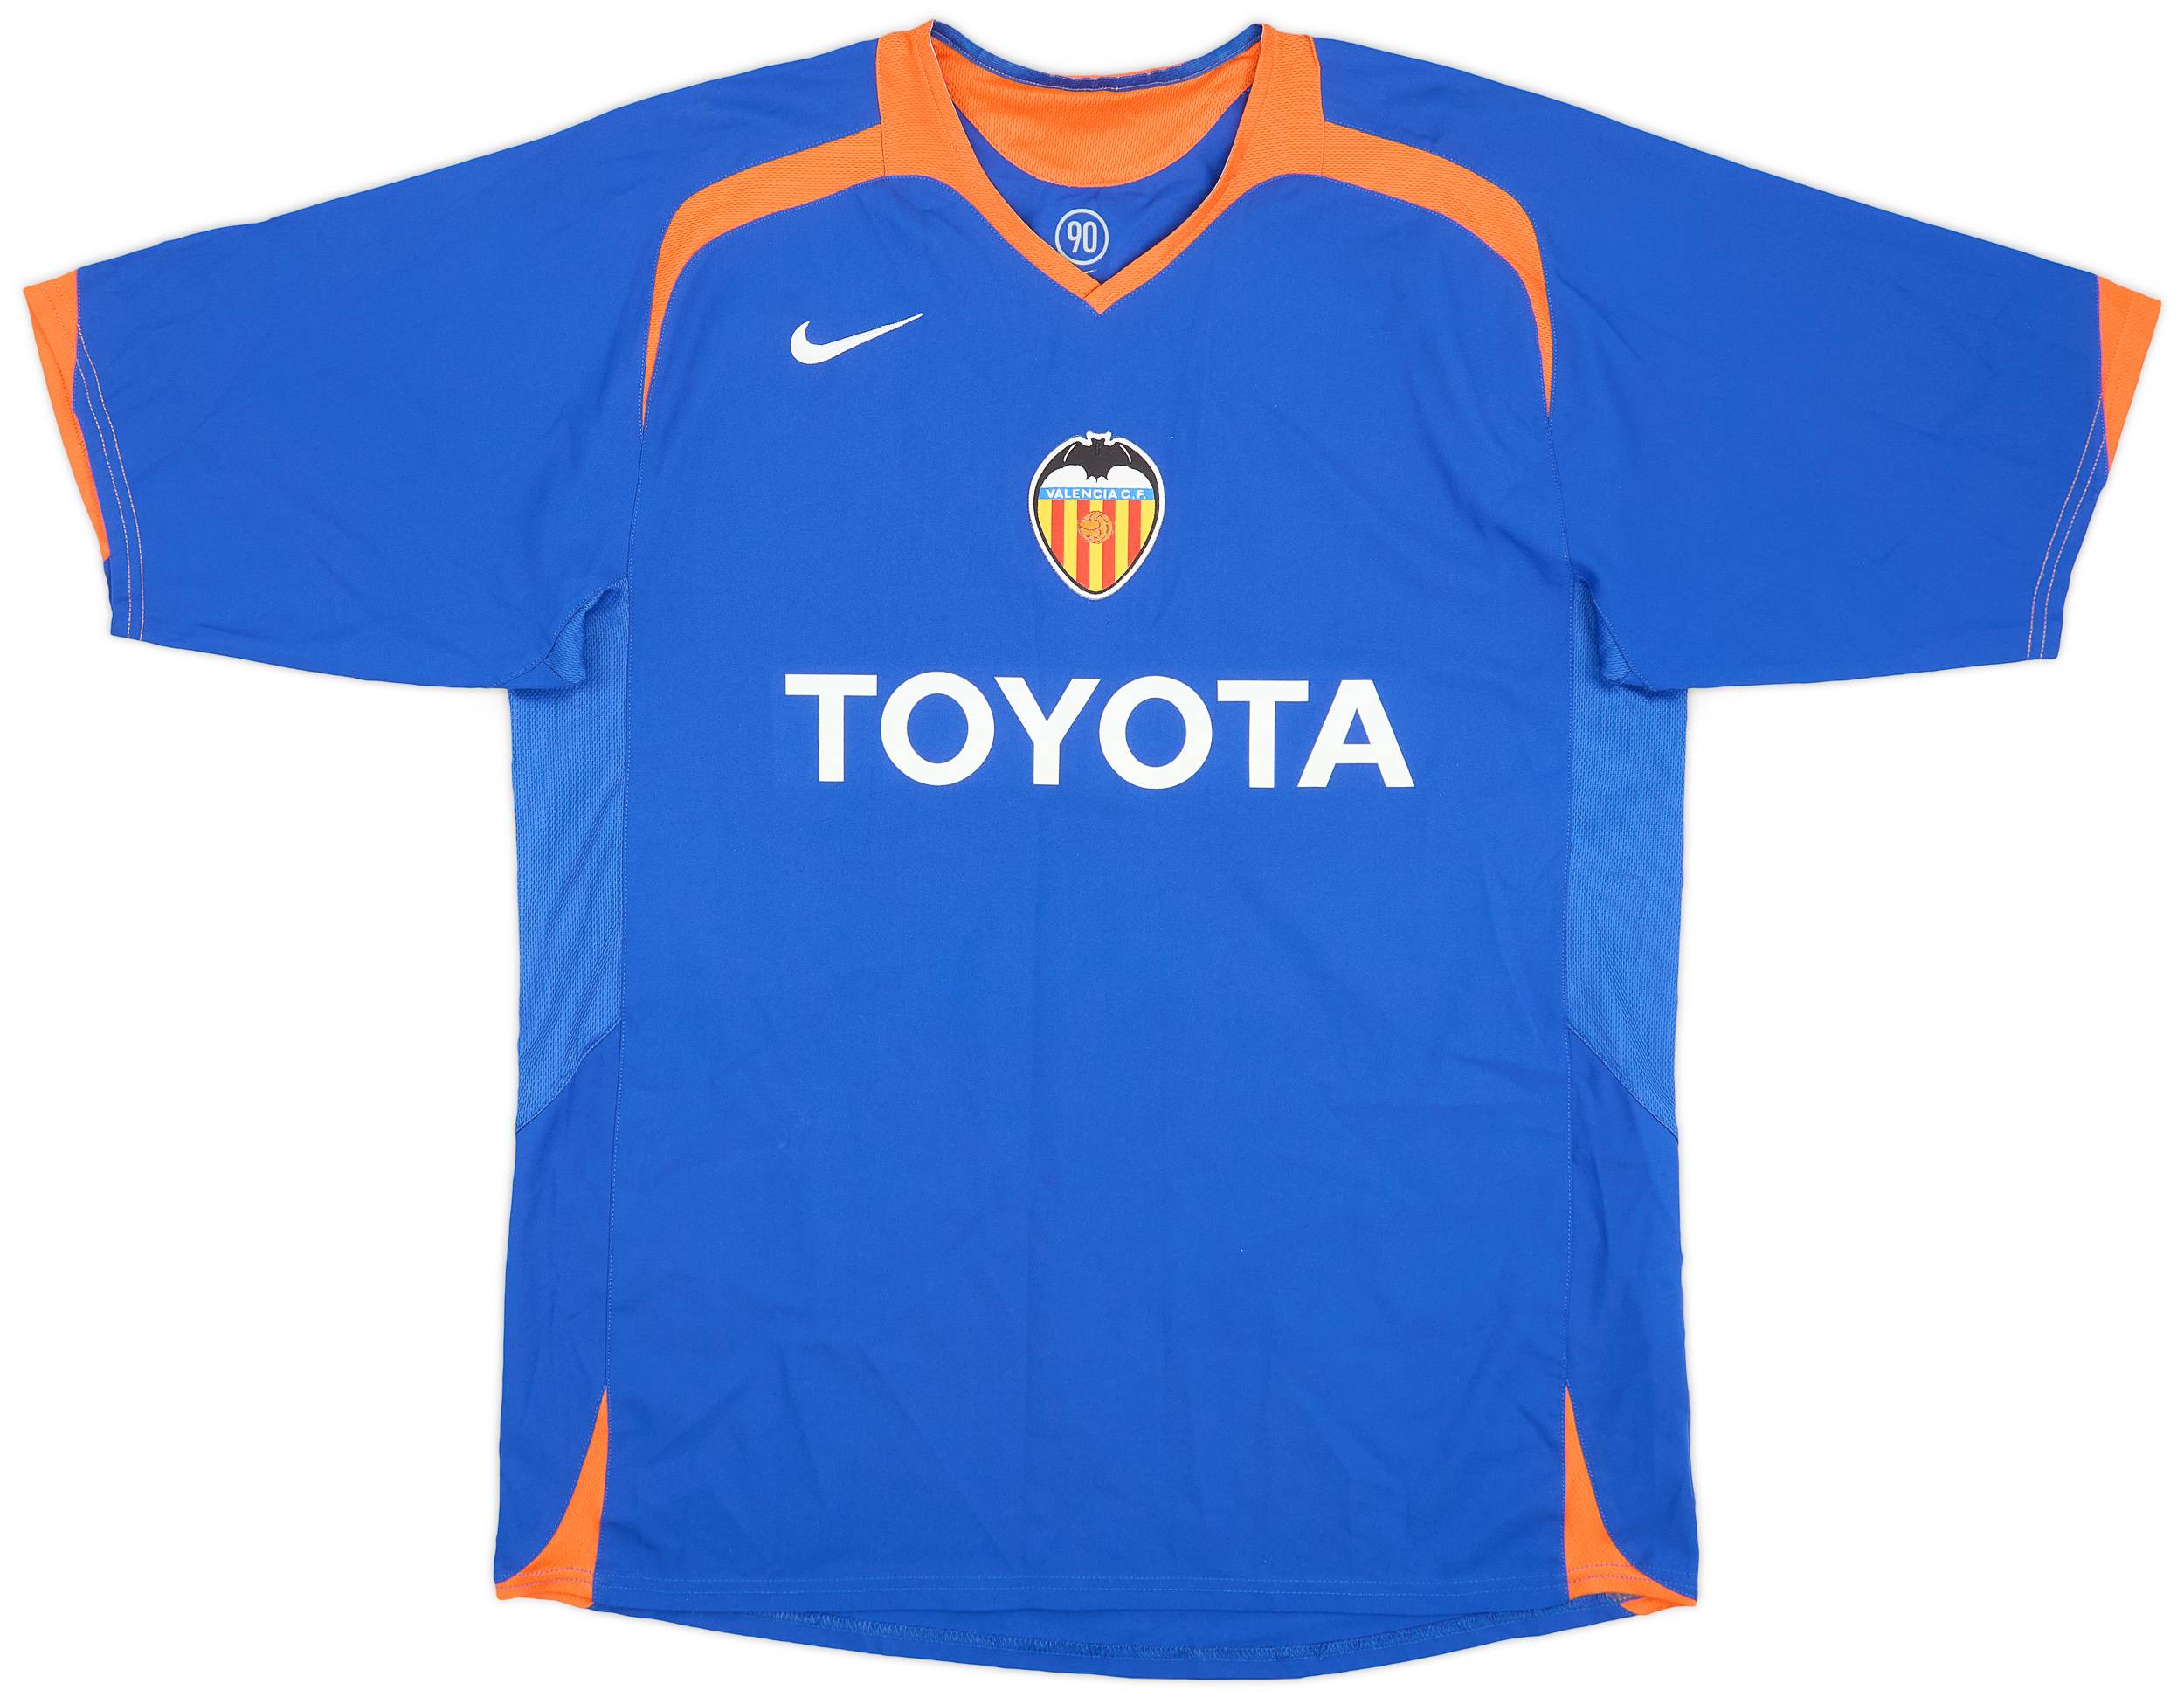 2005-06 Valencia Away Shirt - 9/10 - (L)